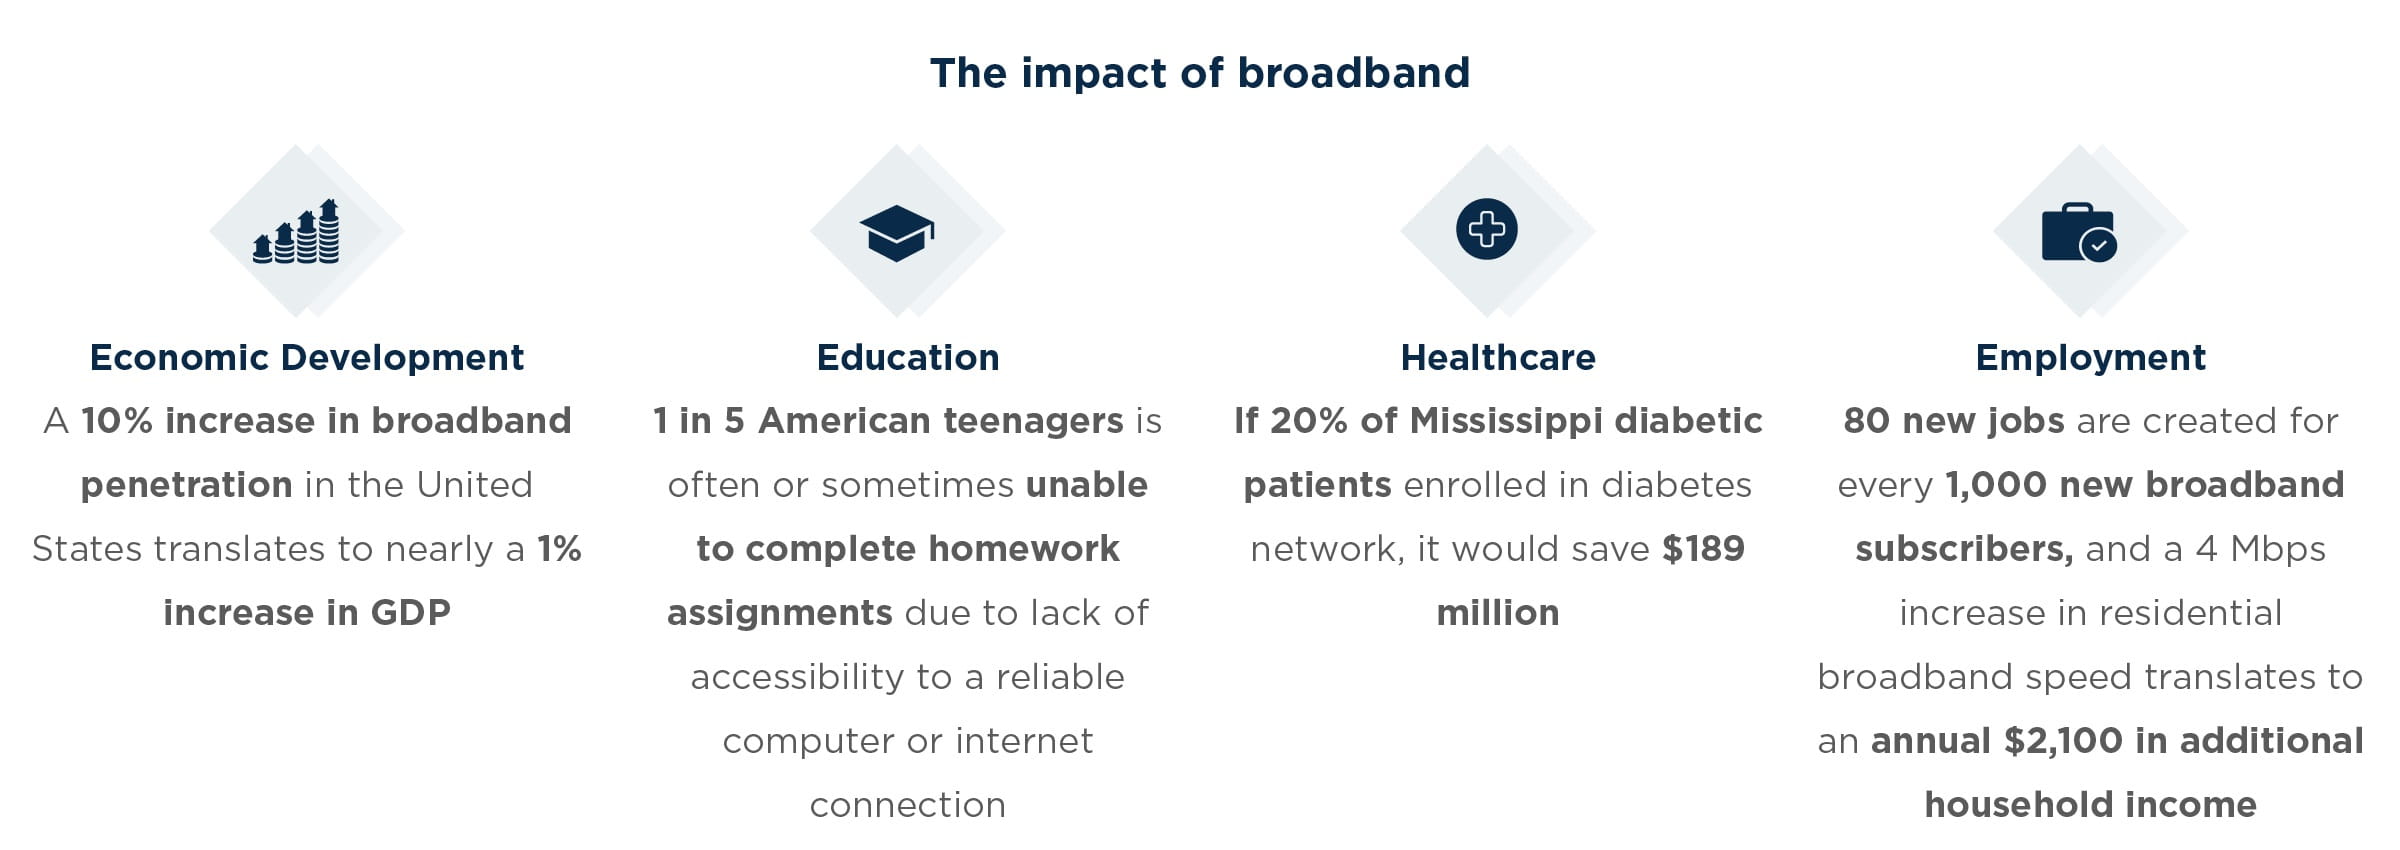 the impact of broadband